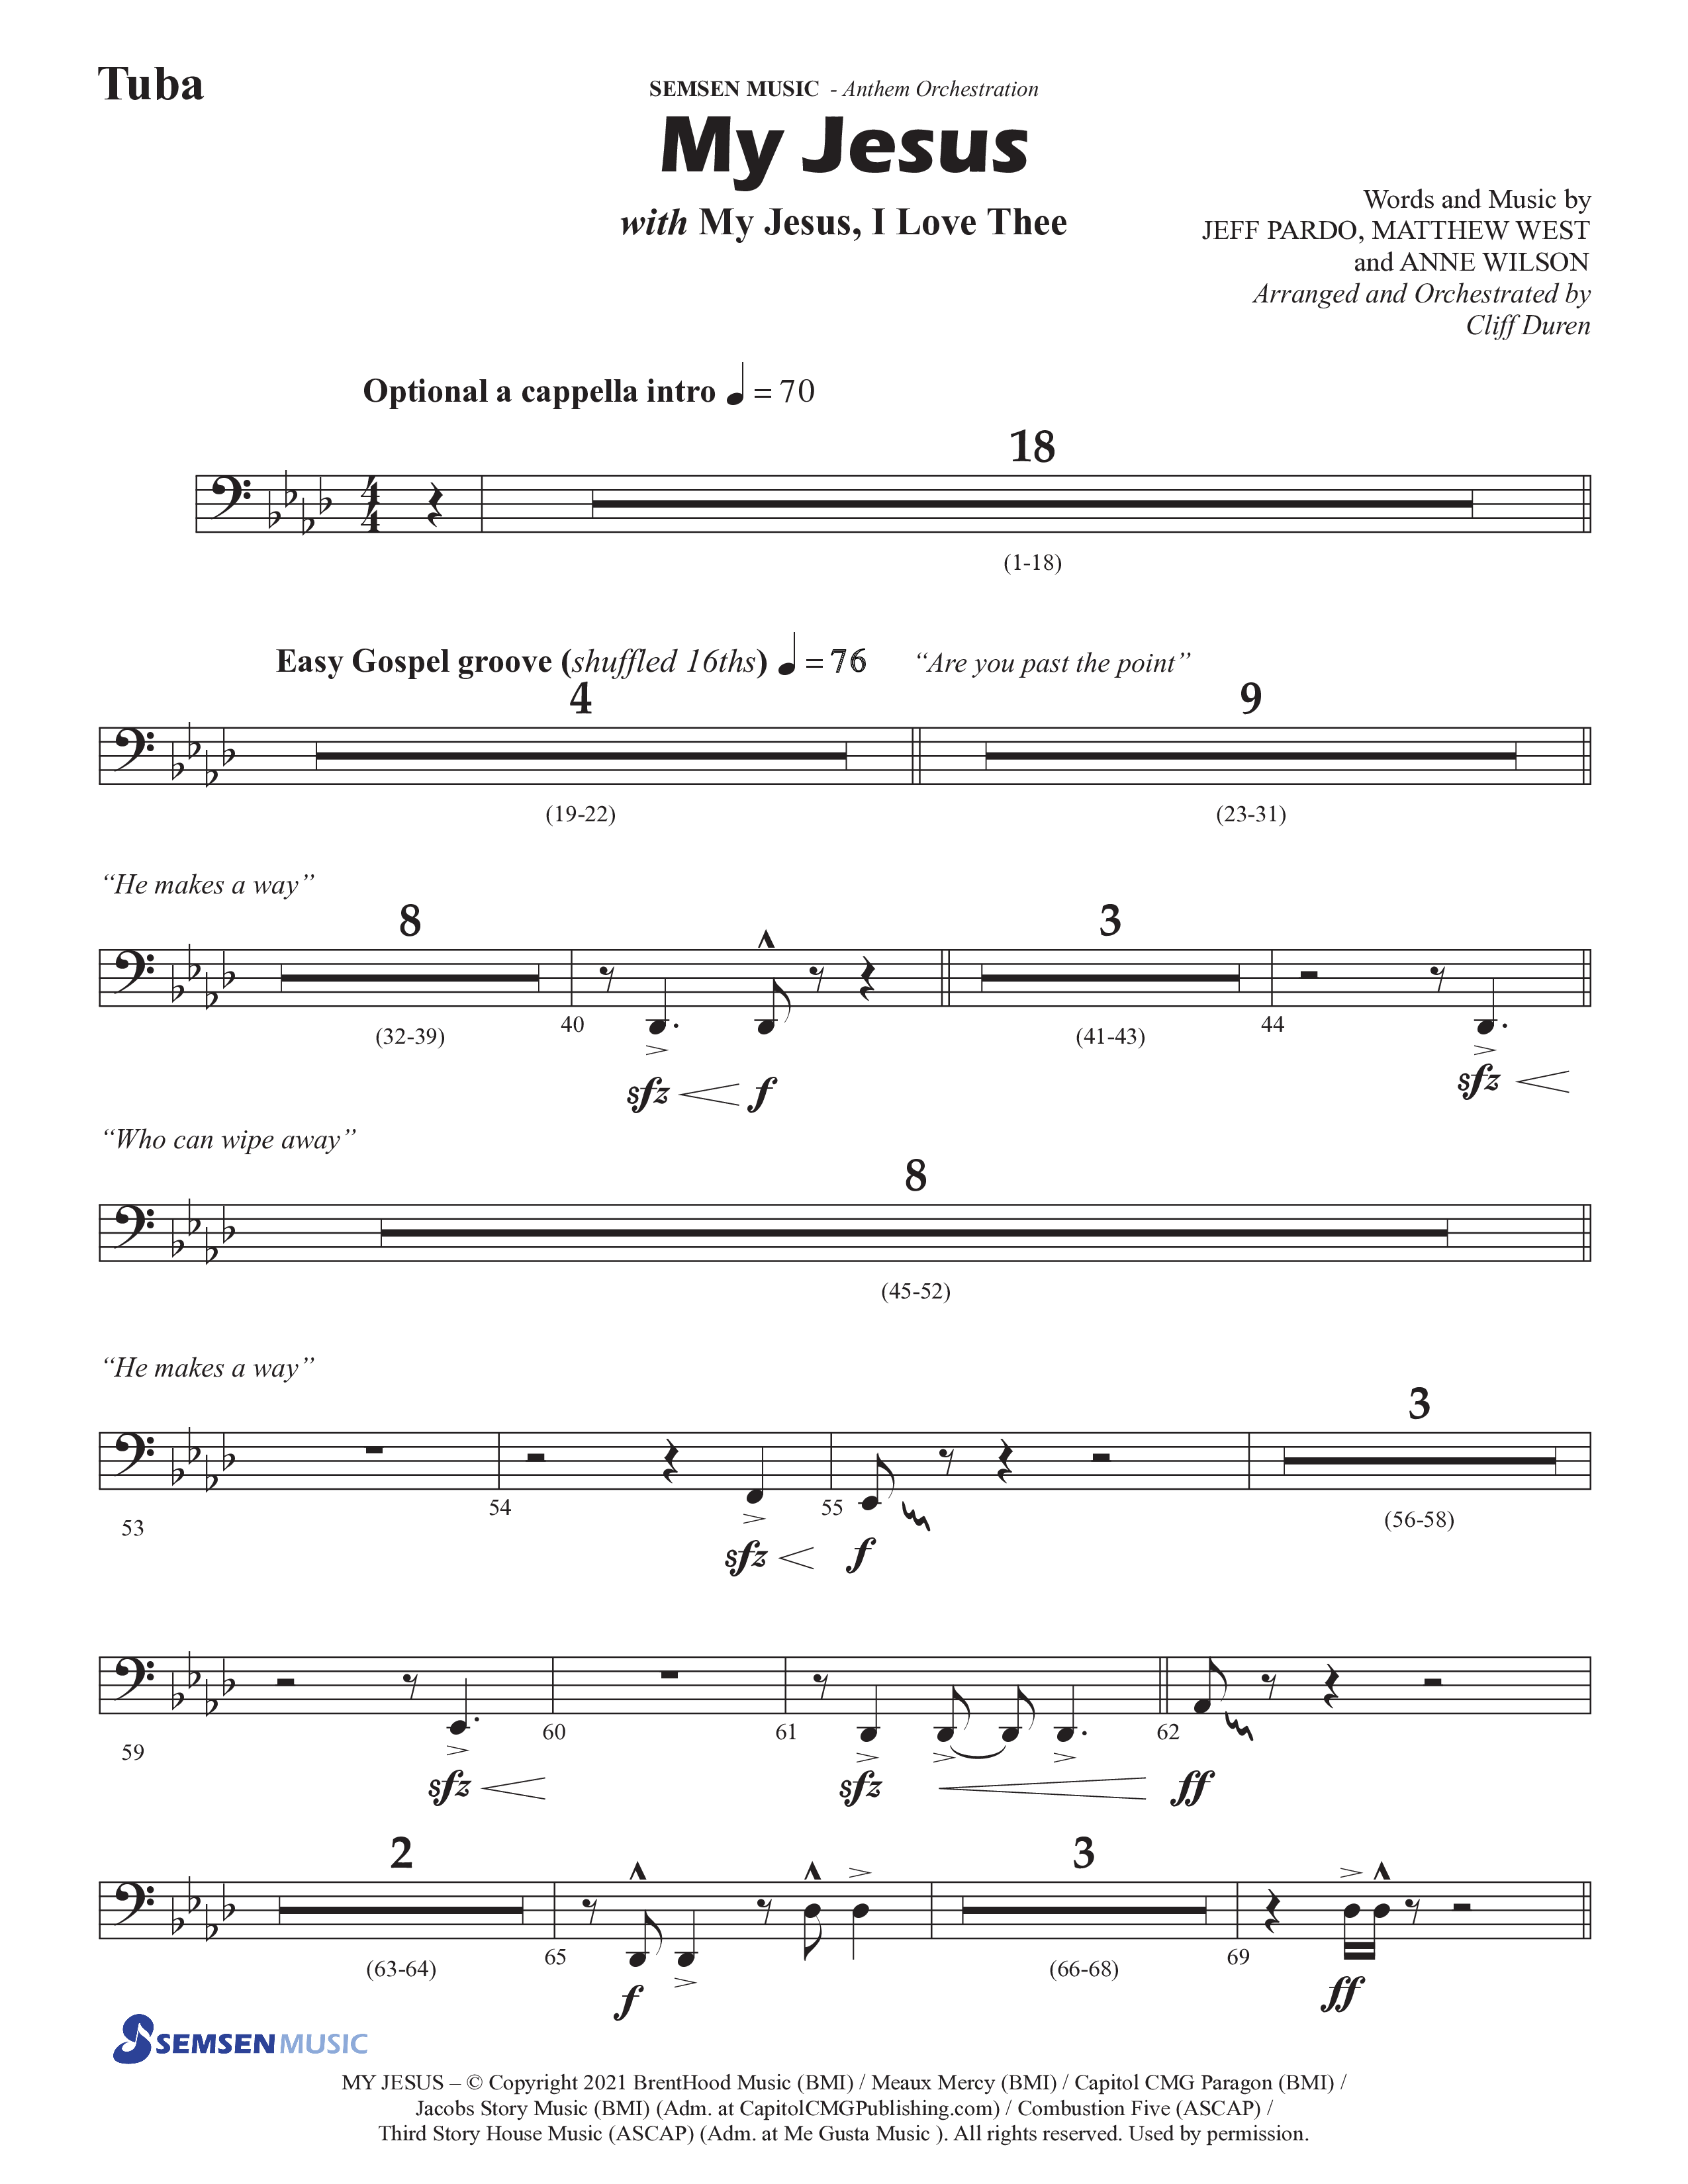 My Jesus (with My Jesus I Love Thee) (Choral Anthem SATB) Tuba (Semsen Music / Arr. Cliff Duren)